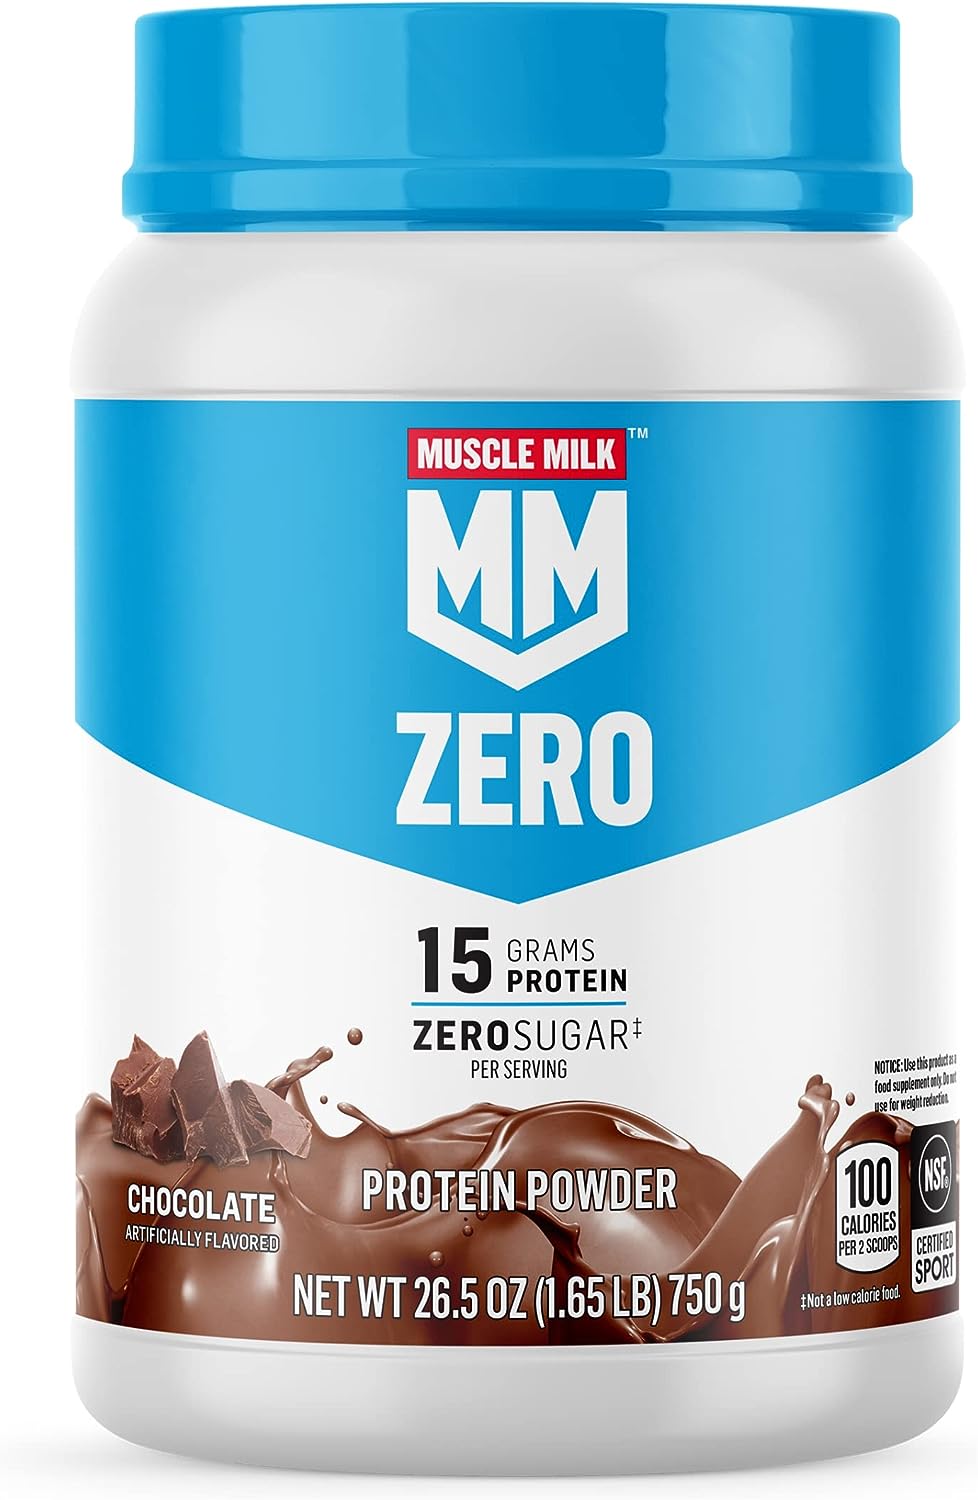 Muscle Milk ZERO, 100 Calorie Protein Powder, Chocolate, 15g Protein,